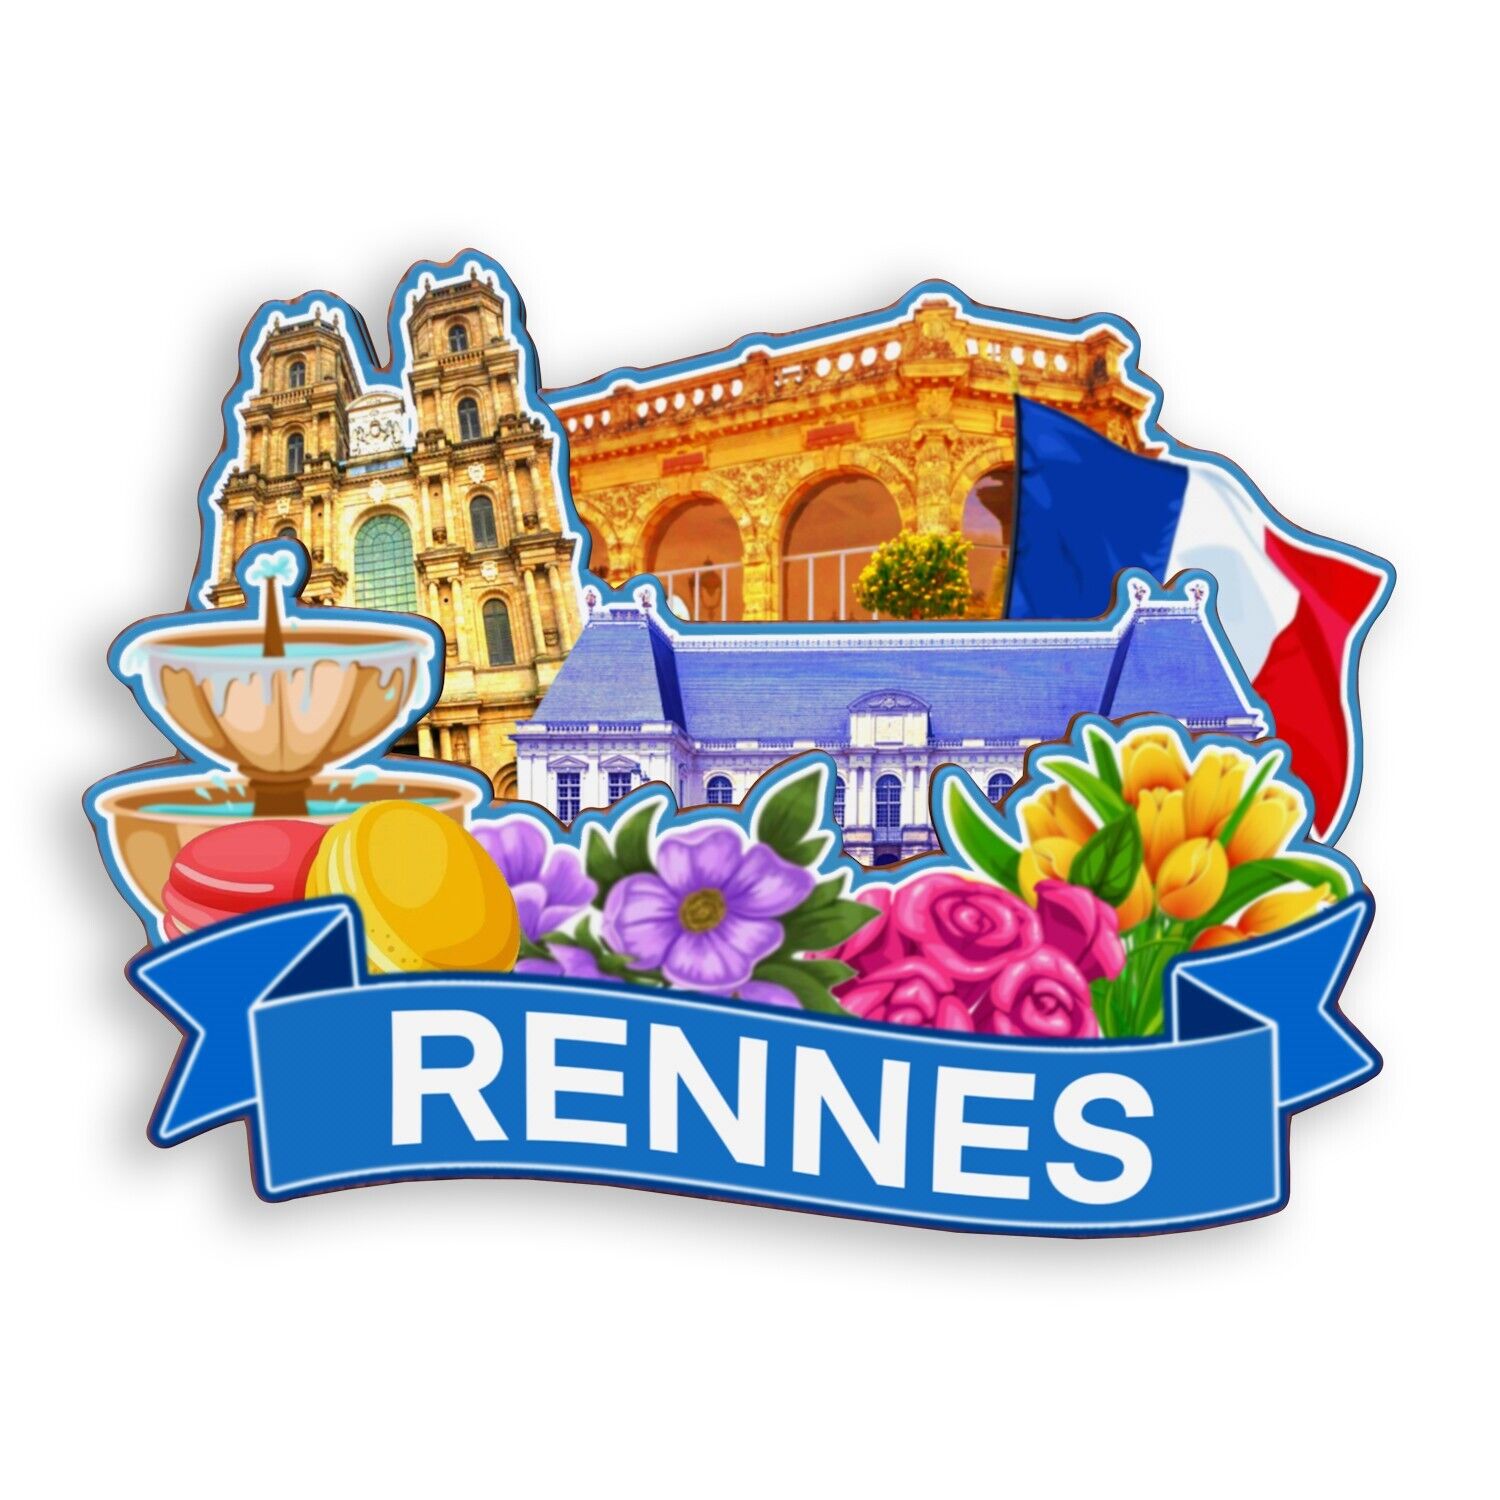 Rennes France Refrigerator magnet 3D travel souvenirs wood craft gifts